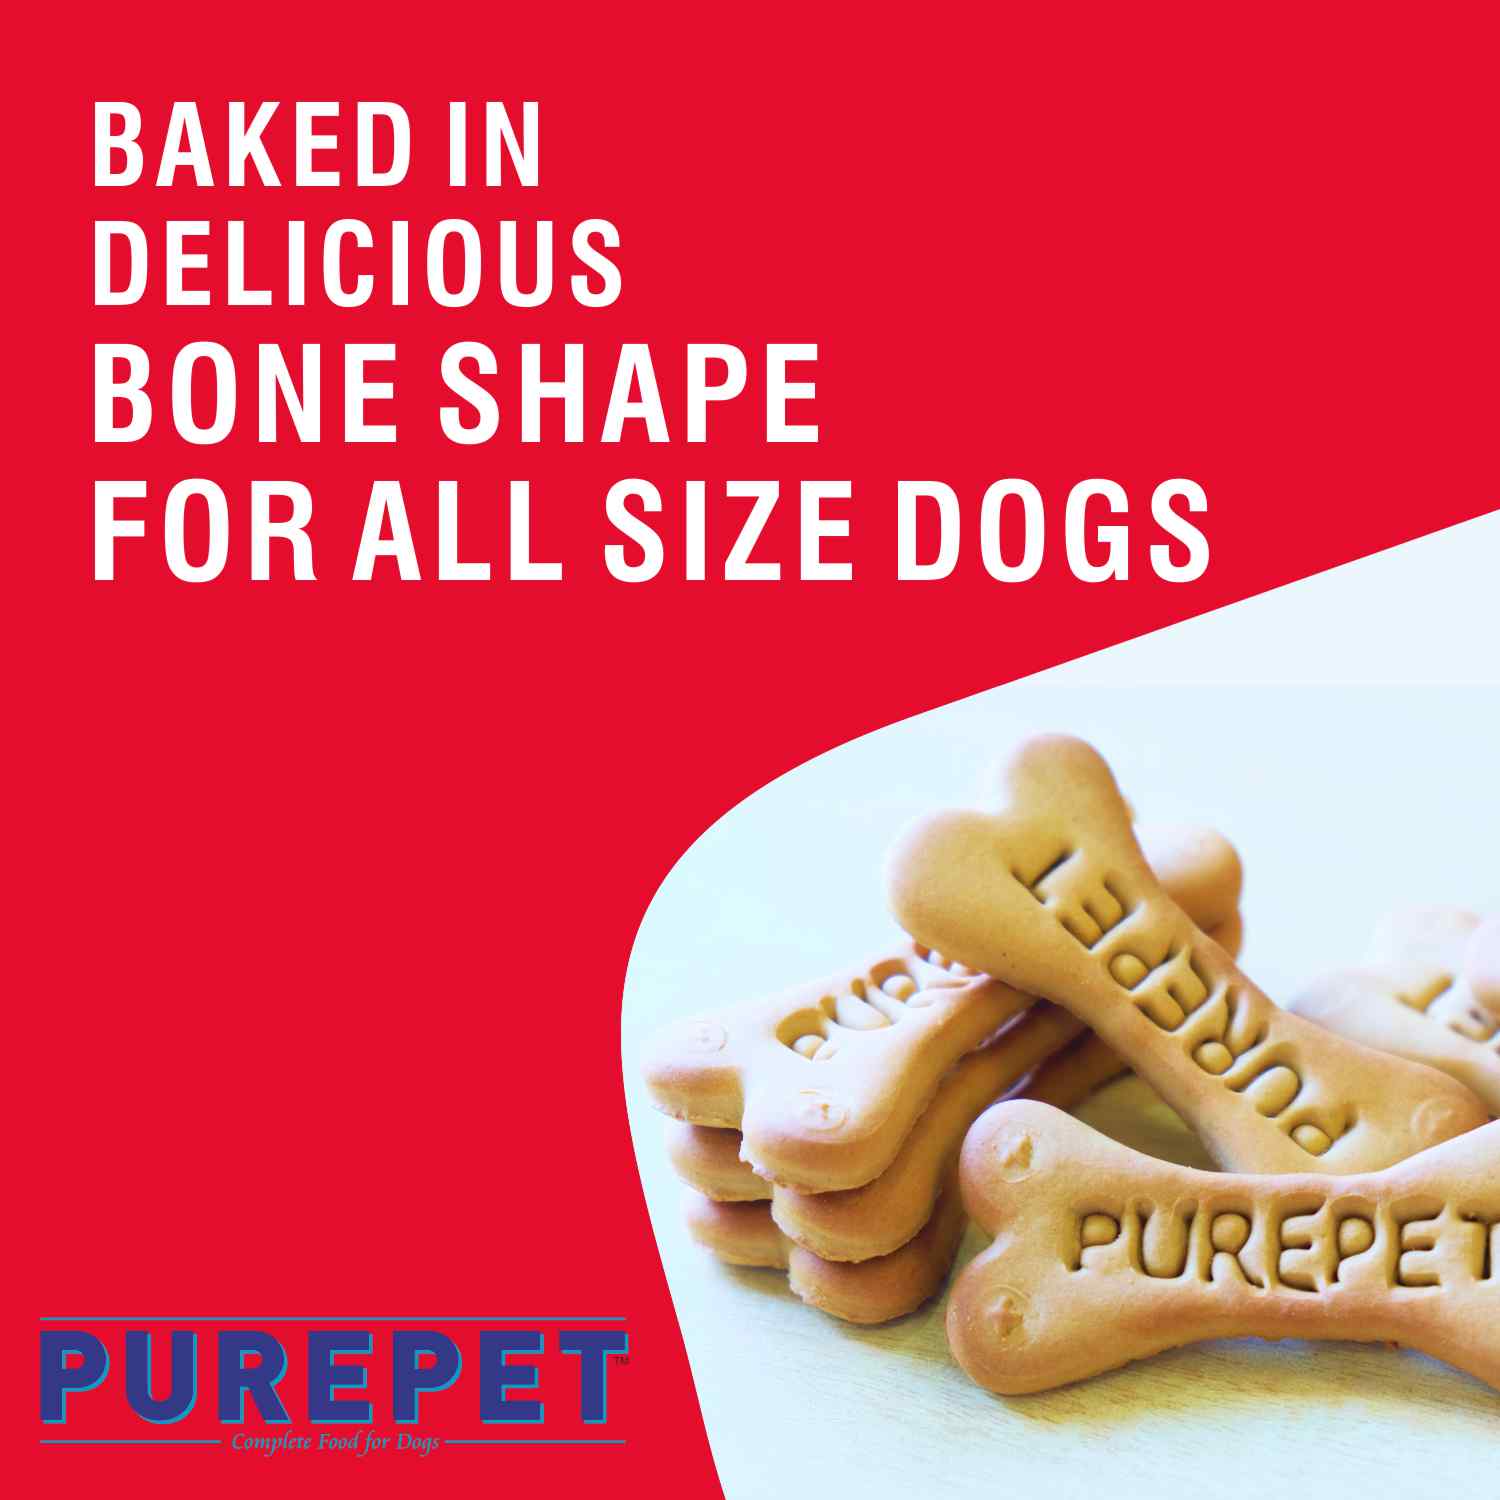 Purepet Mutton Flavour Real Chicken Biscuit Dog Treats